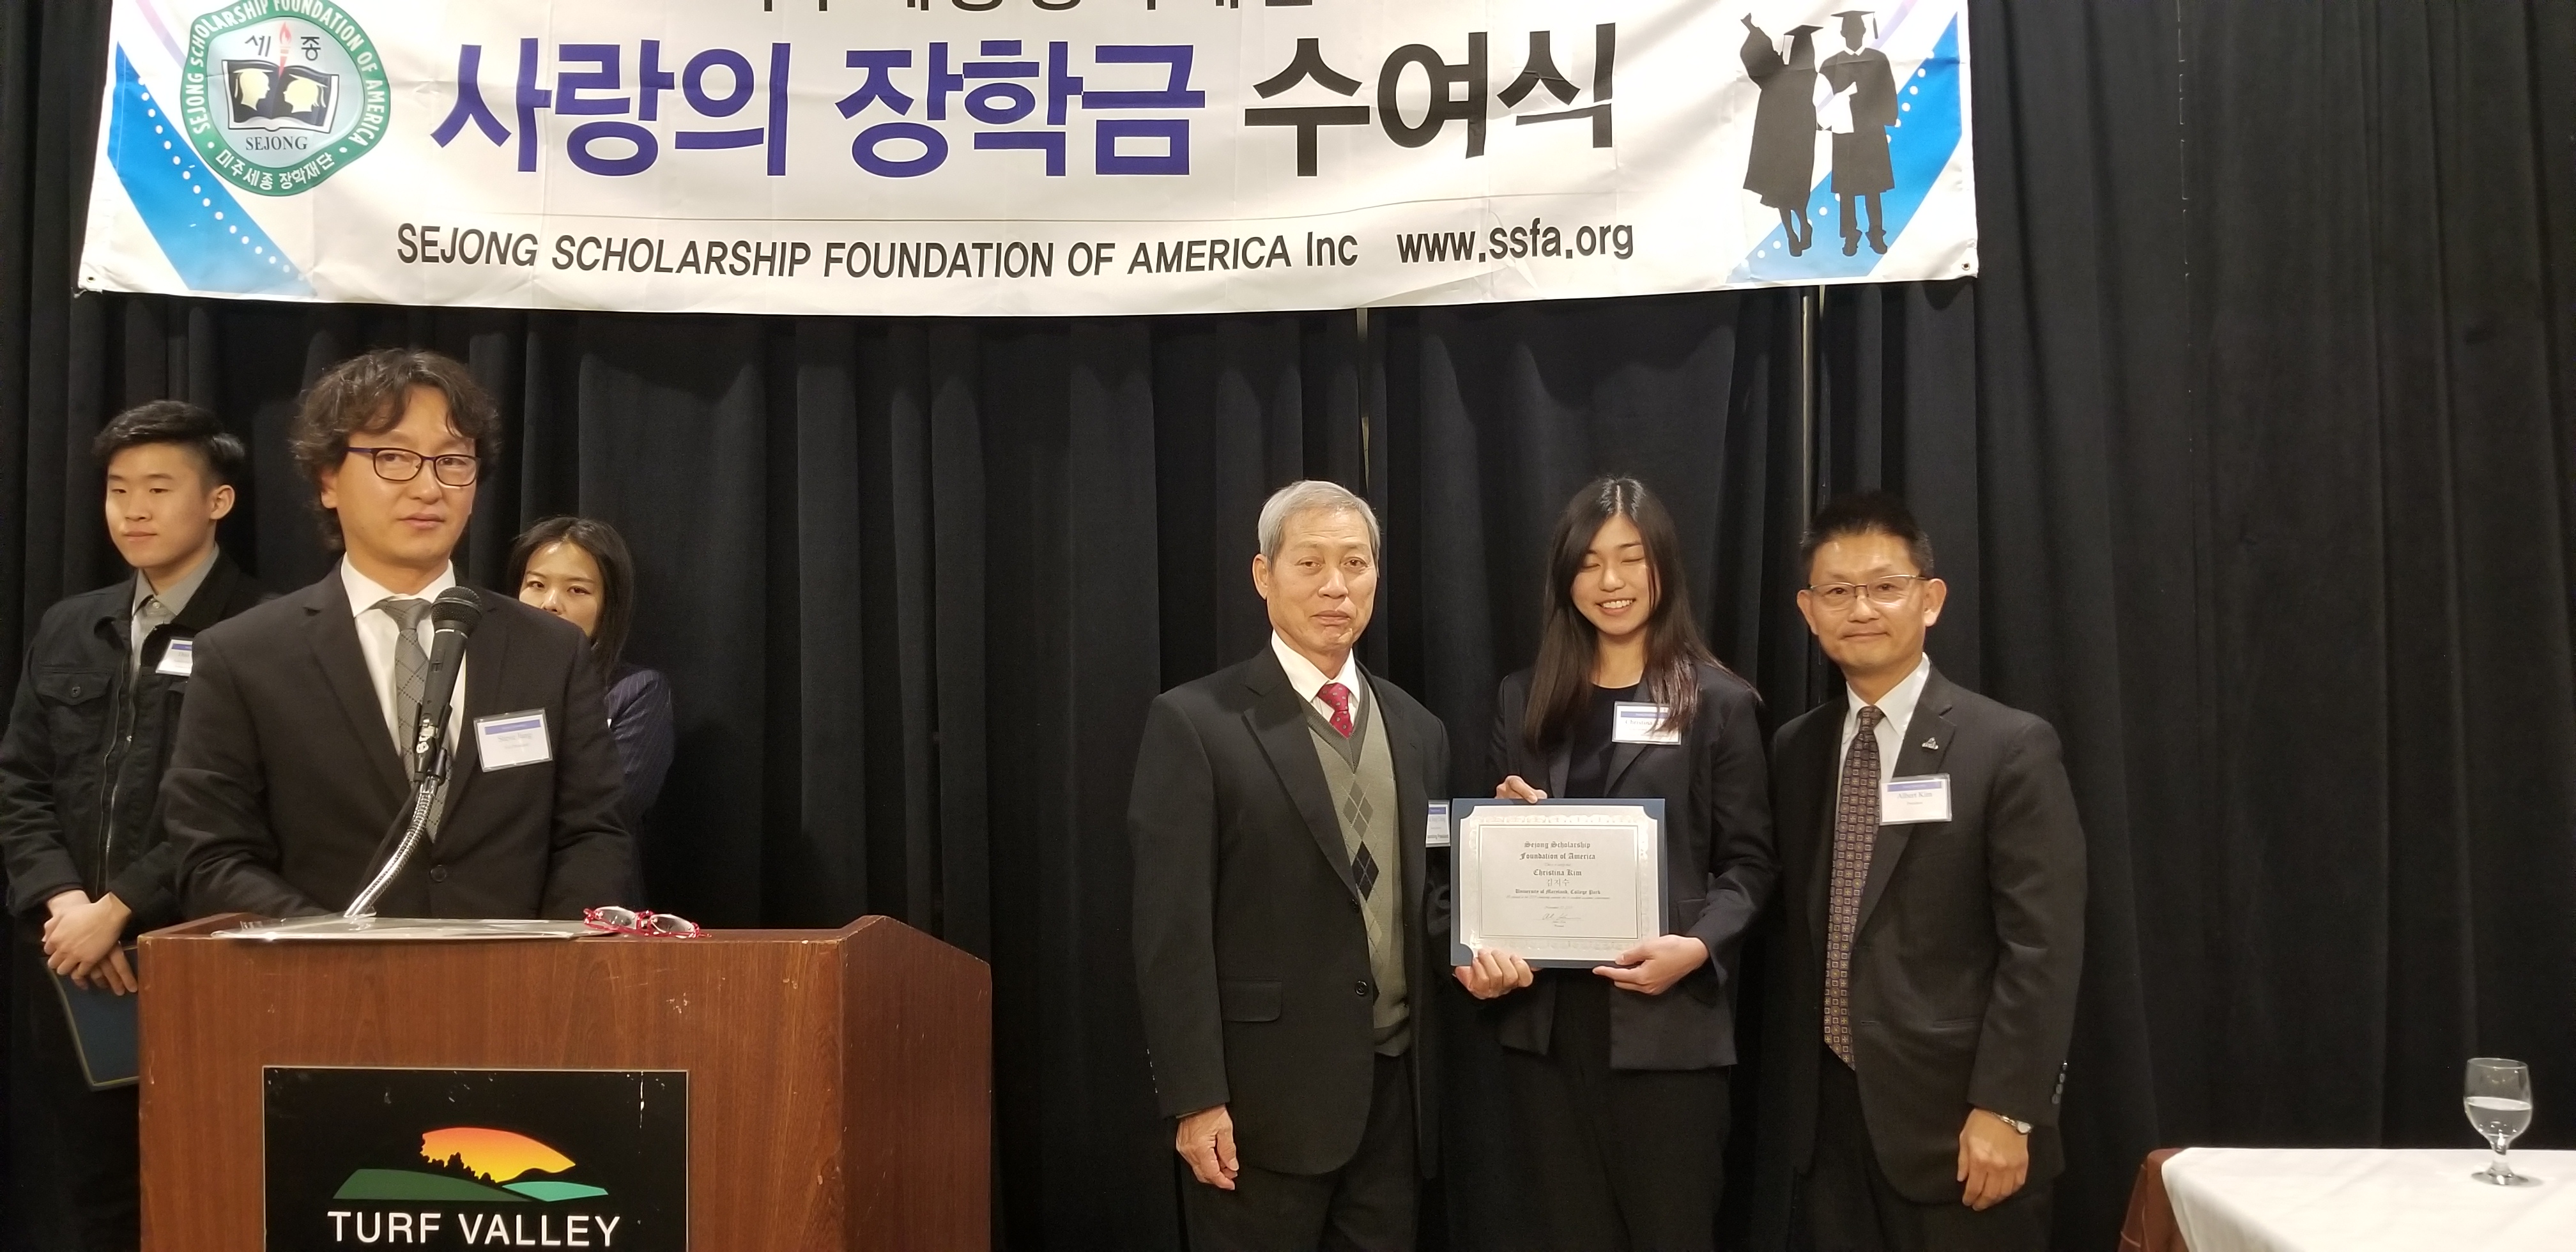 2019 Sejong Scholarship Foundation of America (SSFA) Scholarship Award Ceremony #2